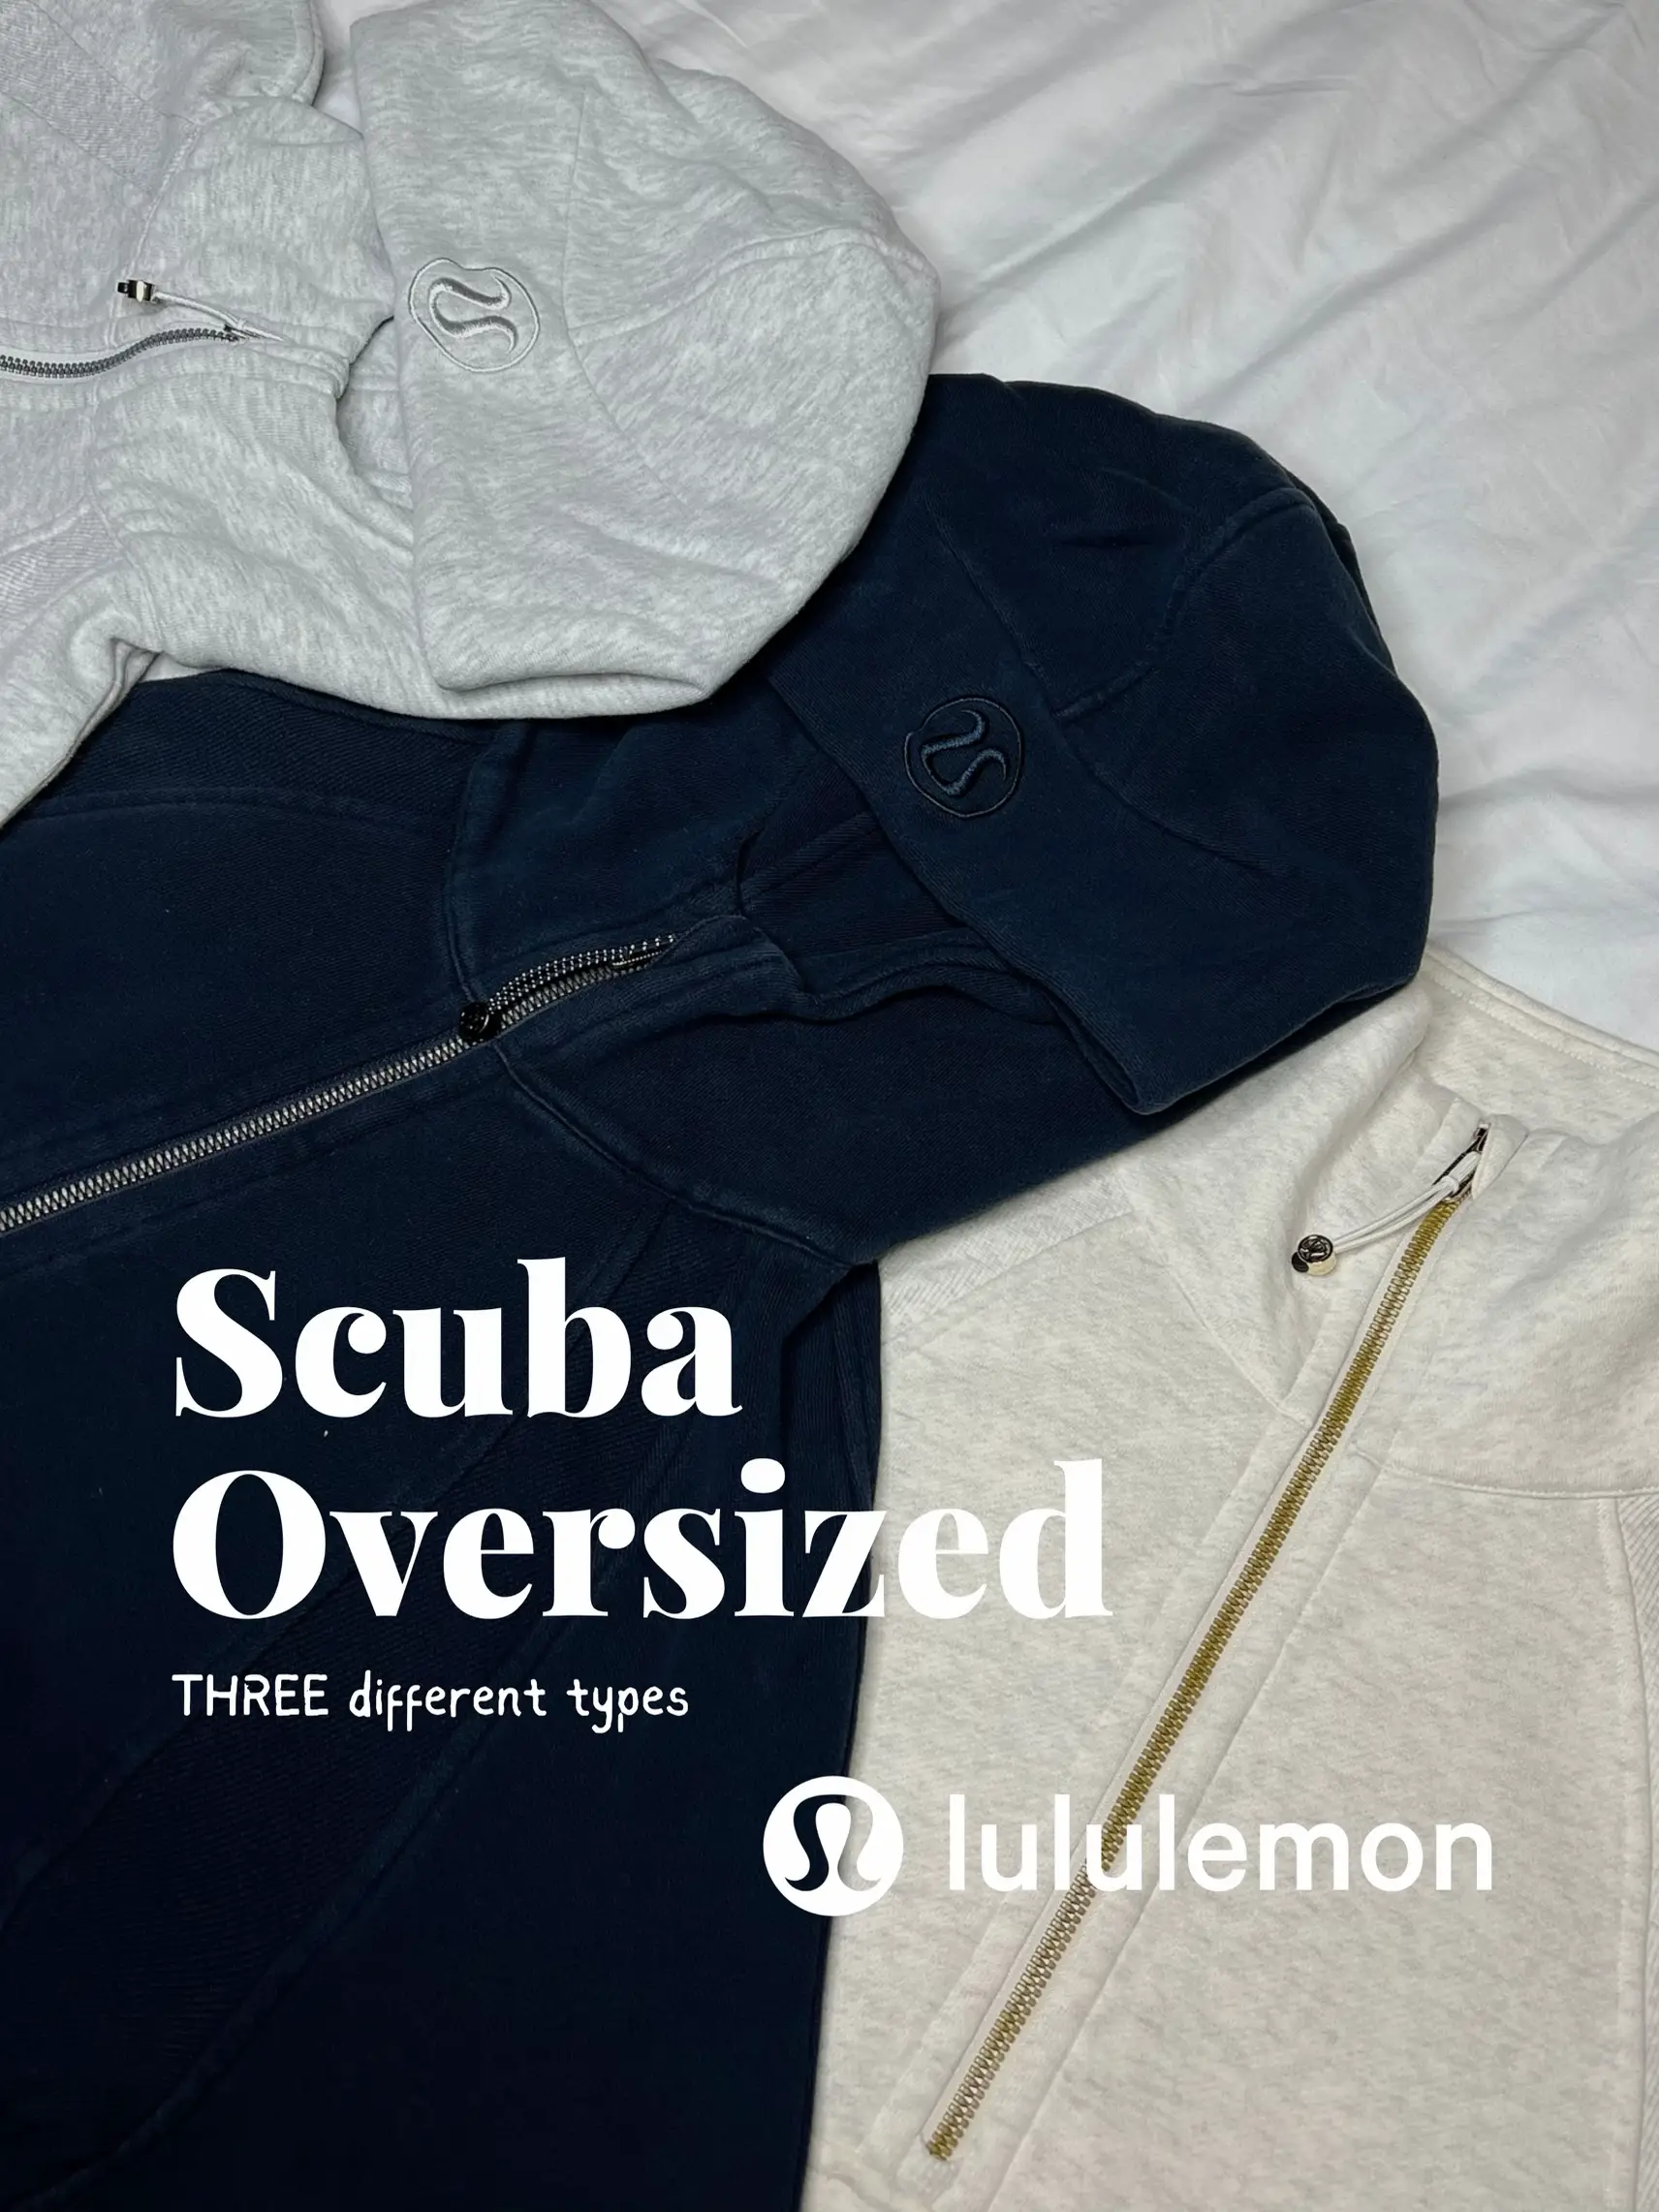 lululemon scuba hoodie review - Lemon8 Search